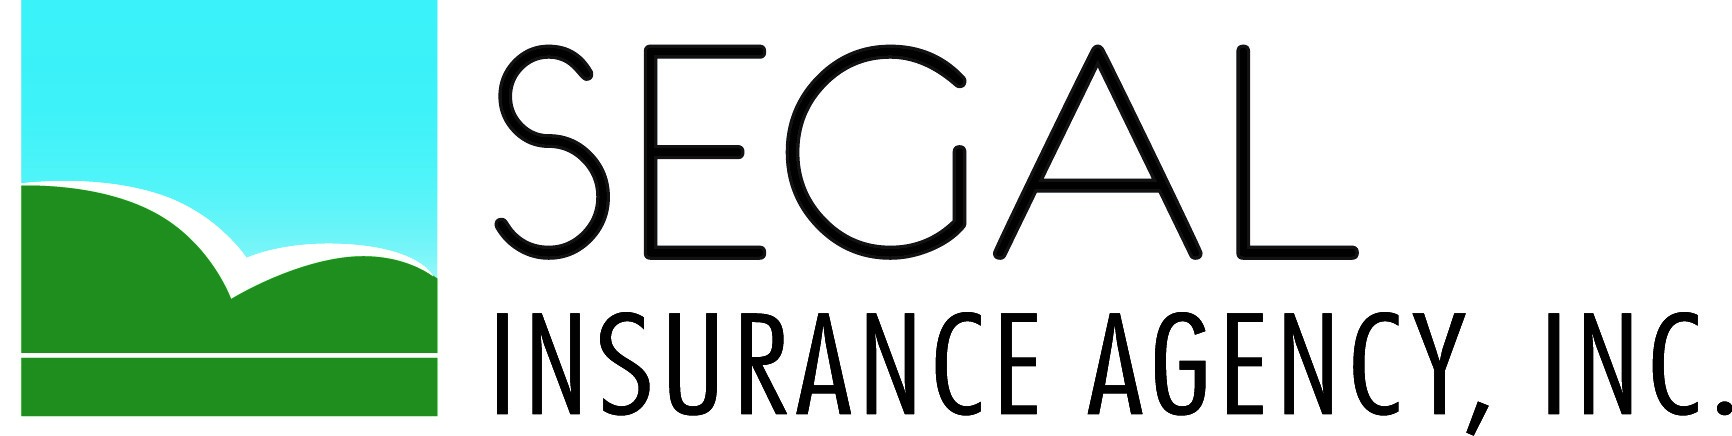 Segal Insurance Agency, Inc.